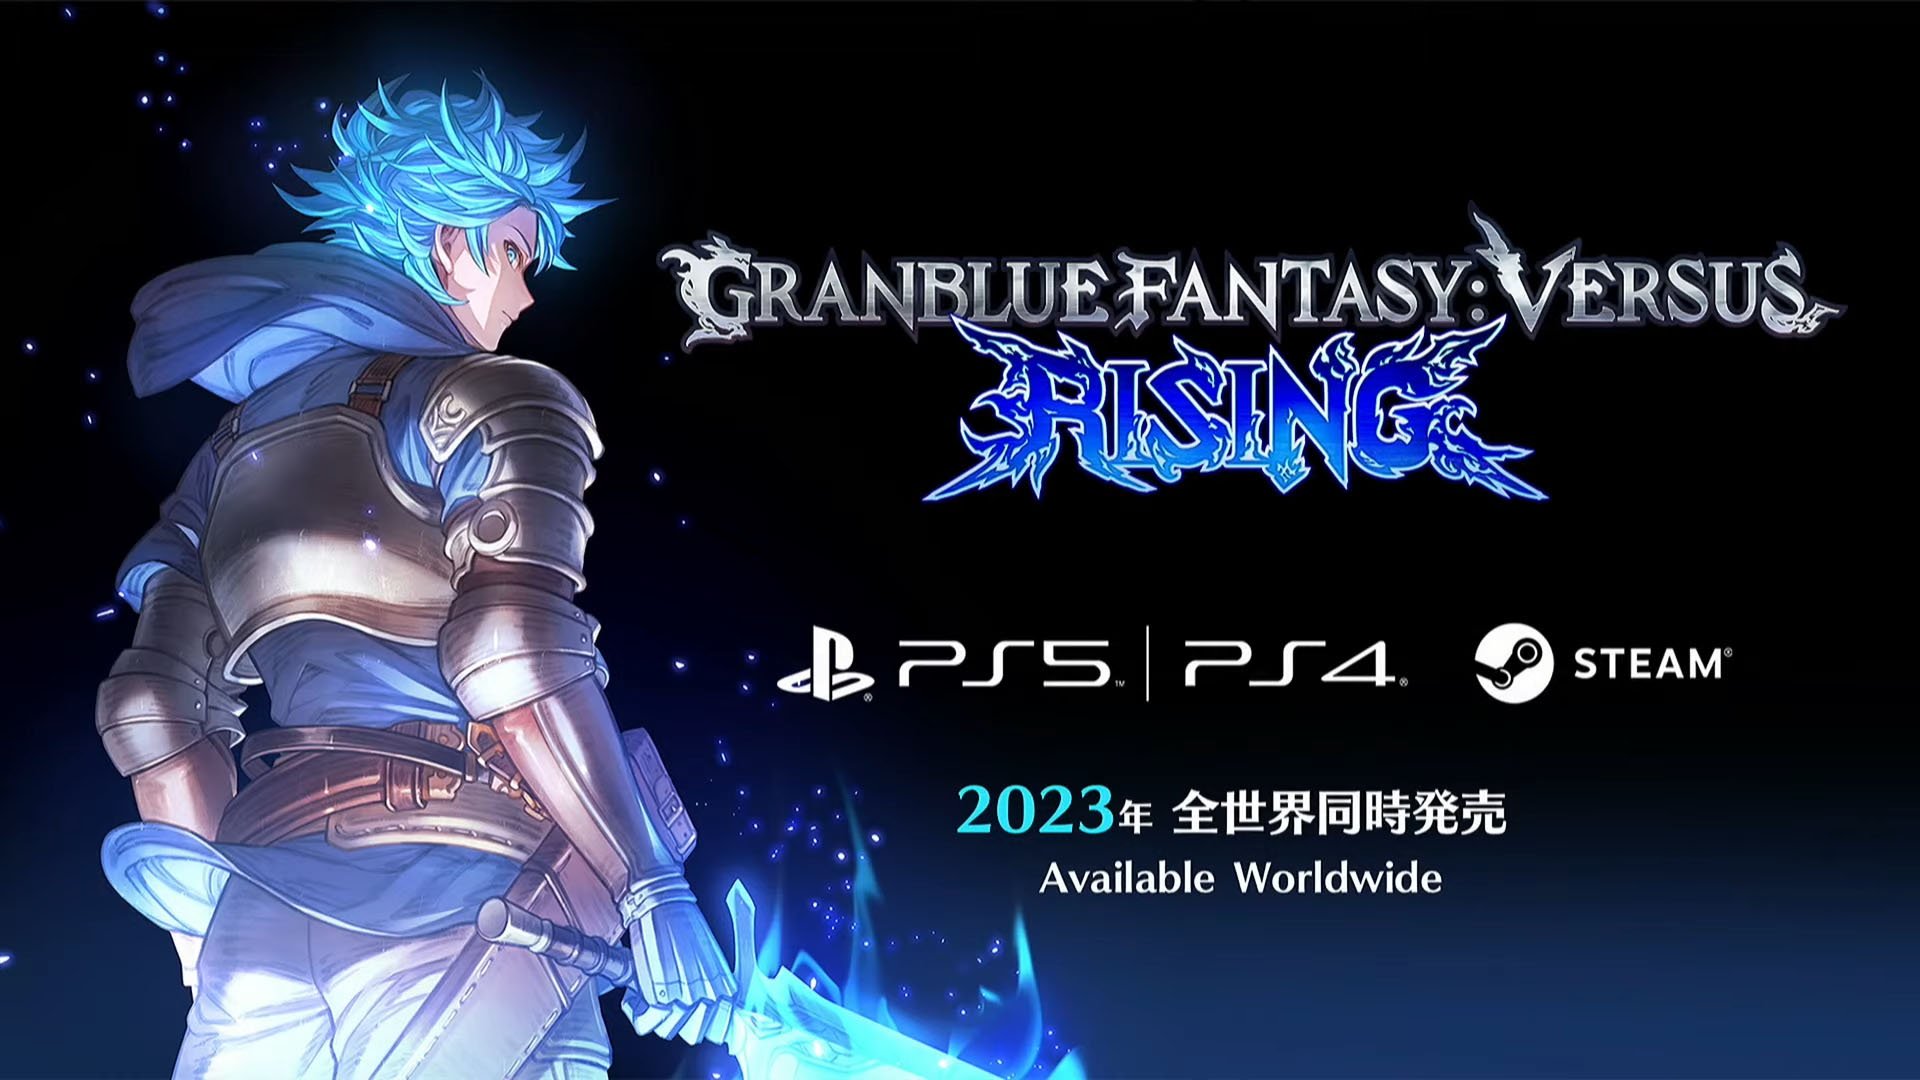 Granblue Fantasy Versus: Rising online beta delayed - Niche Gamer